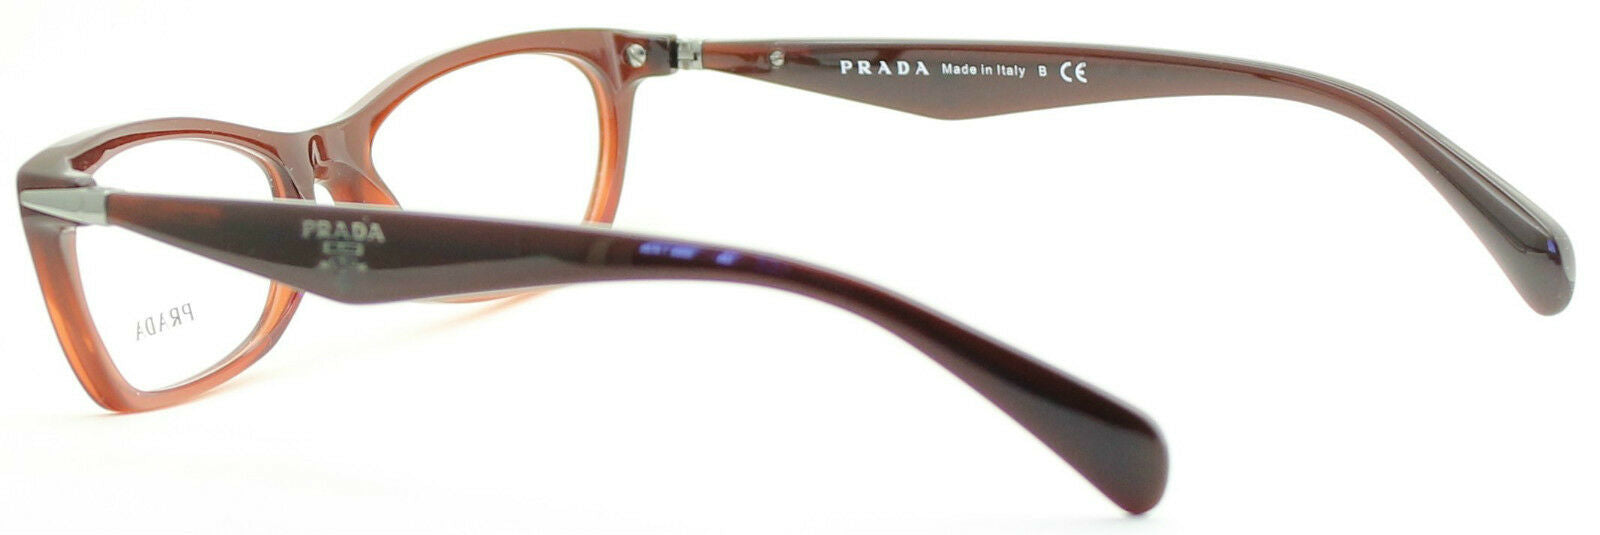 PRADA VPR 15P MAX-1O1 53mm Eyewear FRAMES RX Optical Eyeglasses Glasses - Italy